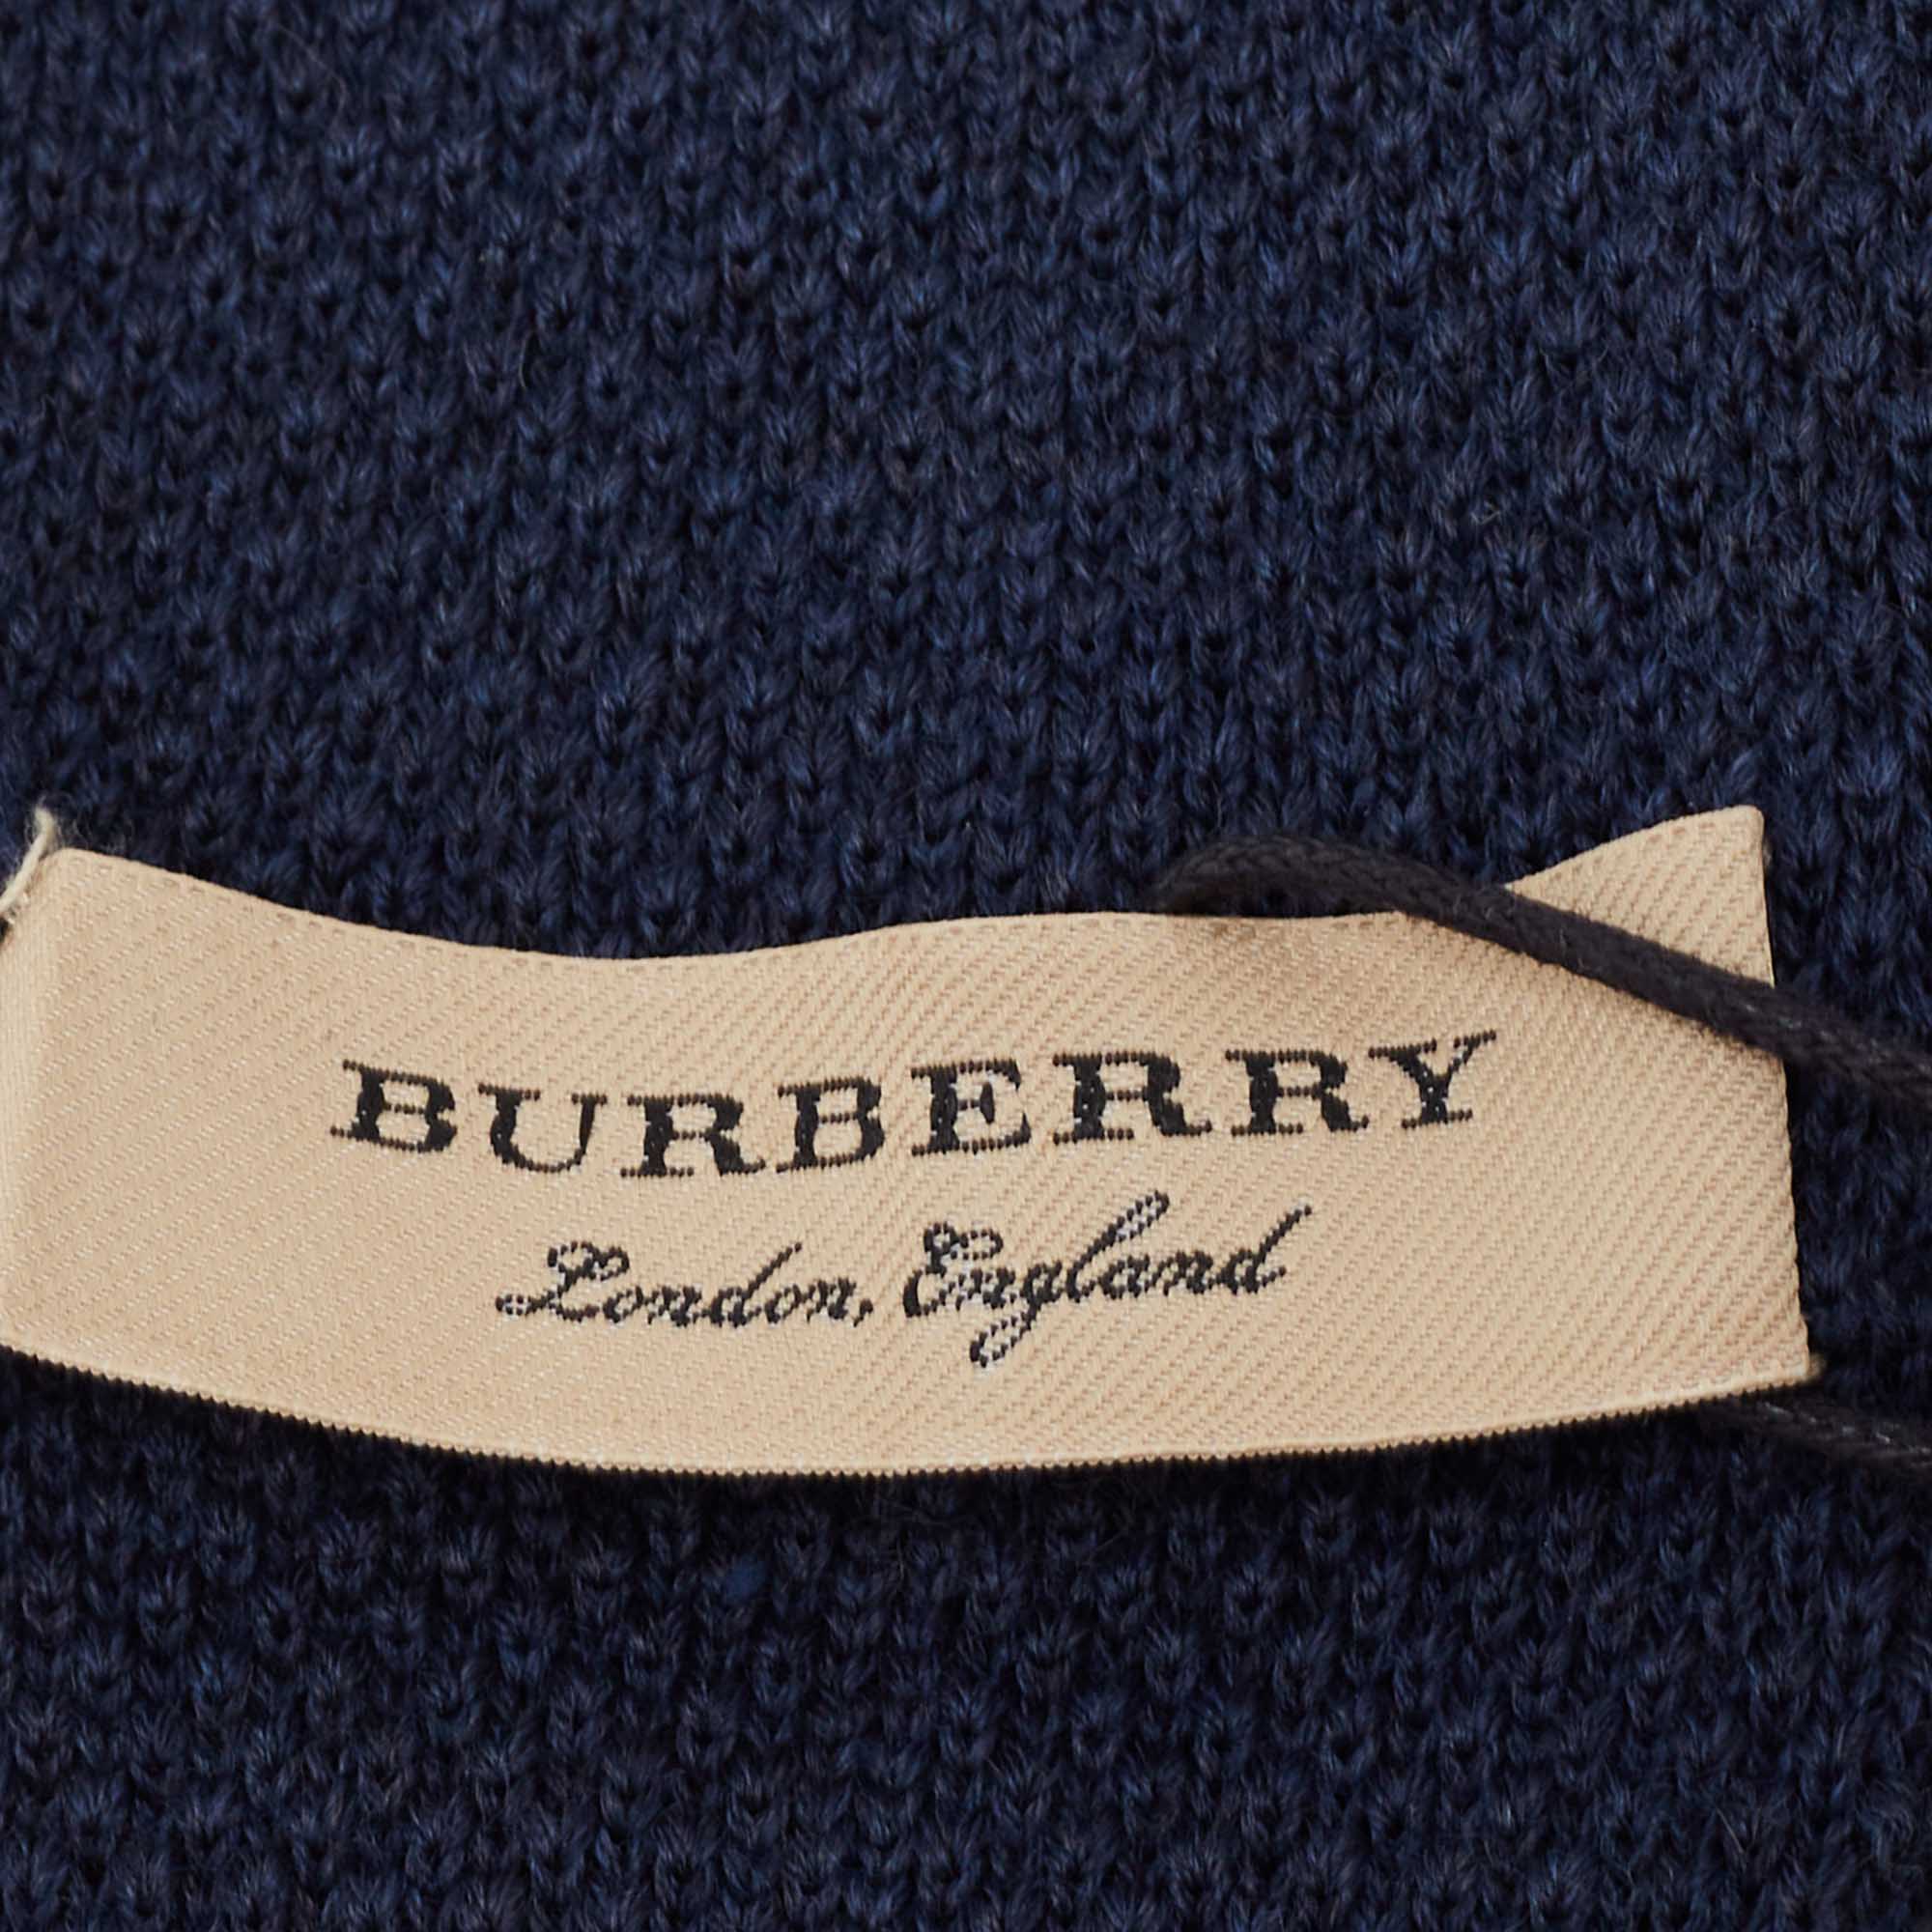 Burberry Navy Blue Kennet Wool Knit Slim Tie